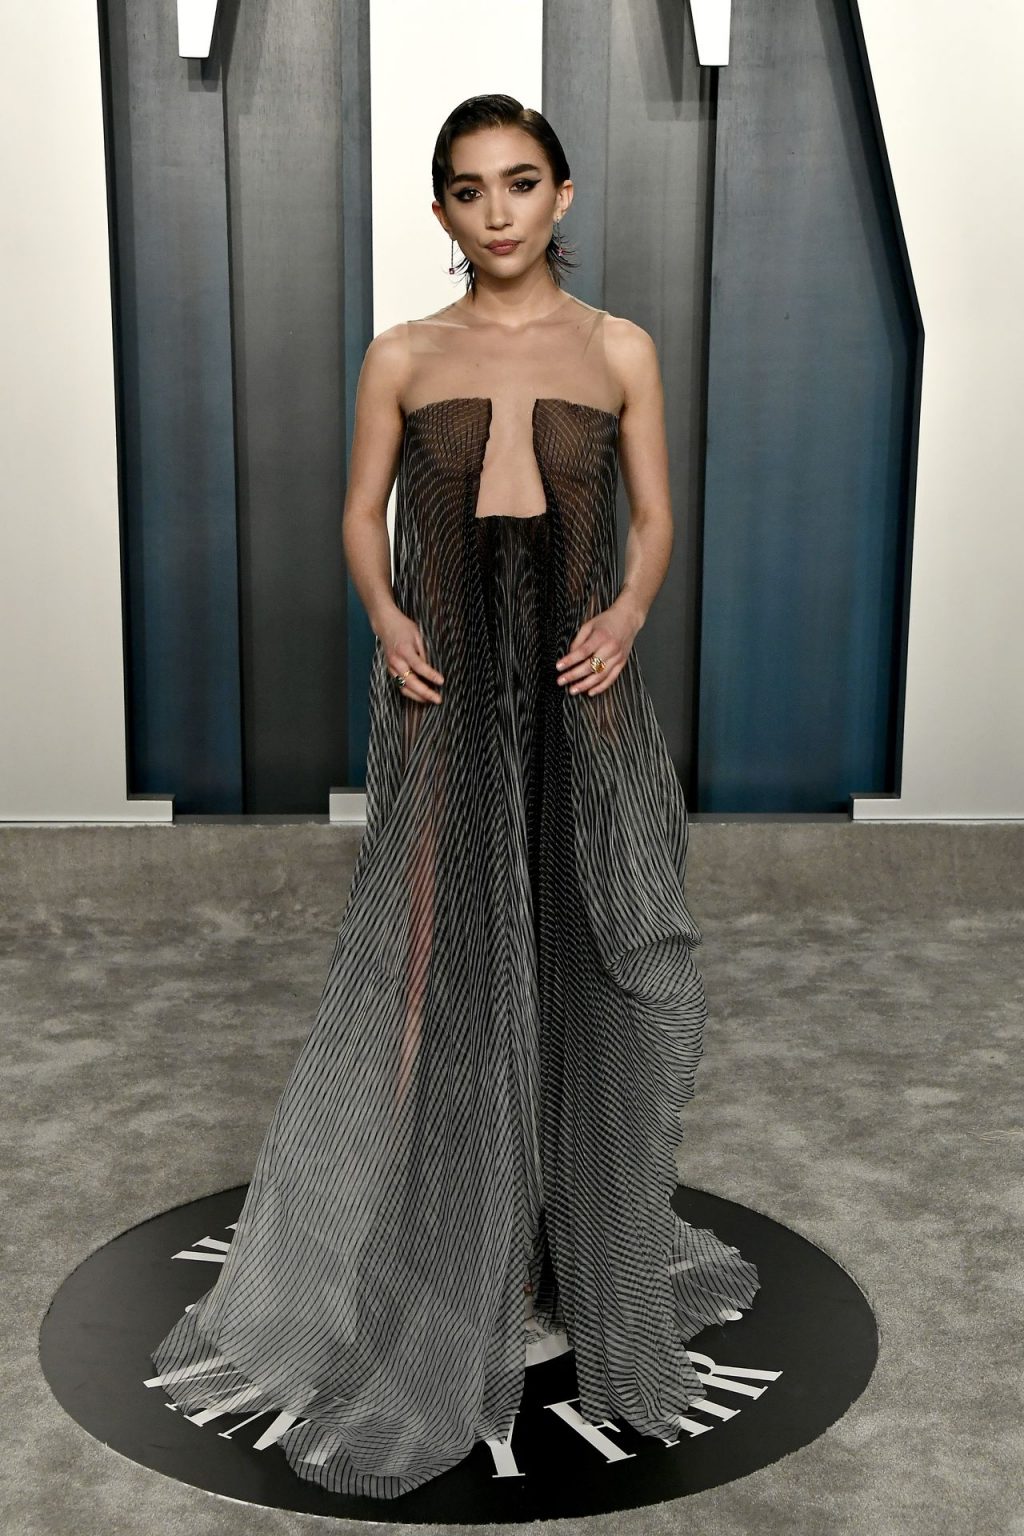 Rowan Blanchard Flaunts Her Young Figure at the Vanity Fair Oscar Party (29 Photos)